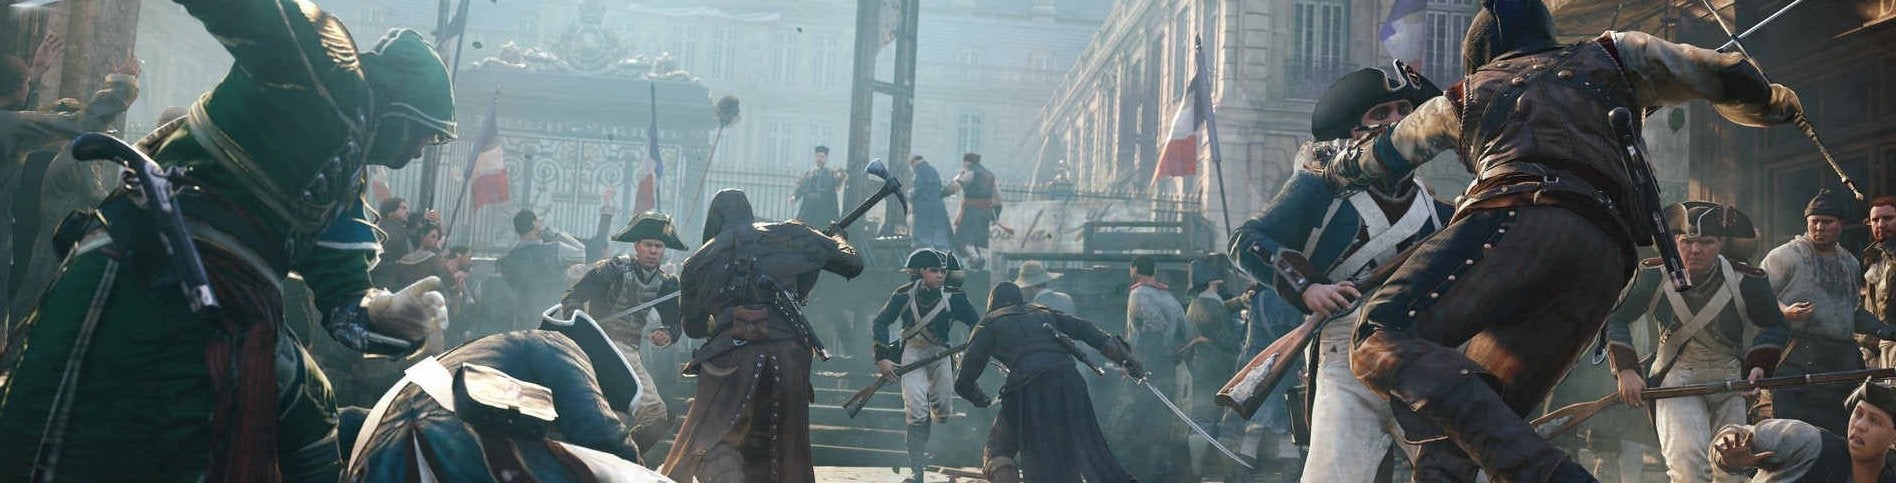 Imagen para Guía Assassin's Creed Unity